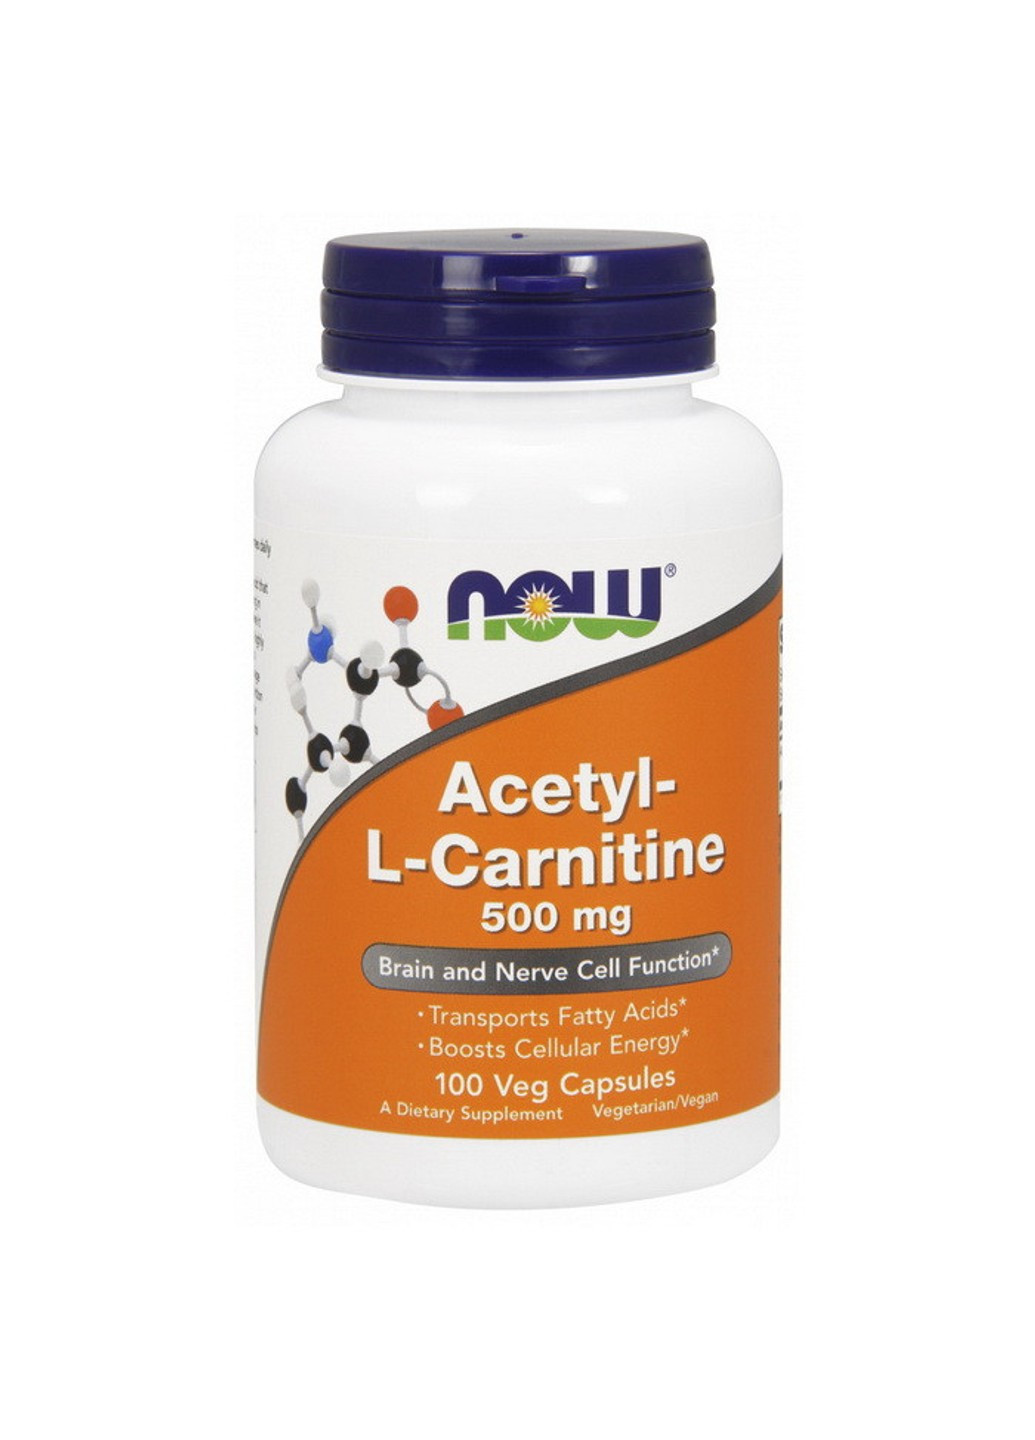 Ацетил Л-карнитин Acetyl-L-Carnitine 500 mg (100 капс) нау фудс Now Foods (255363138)